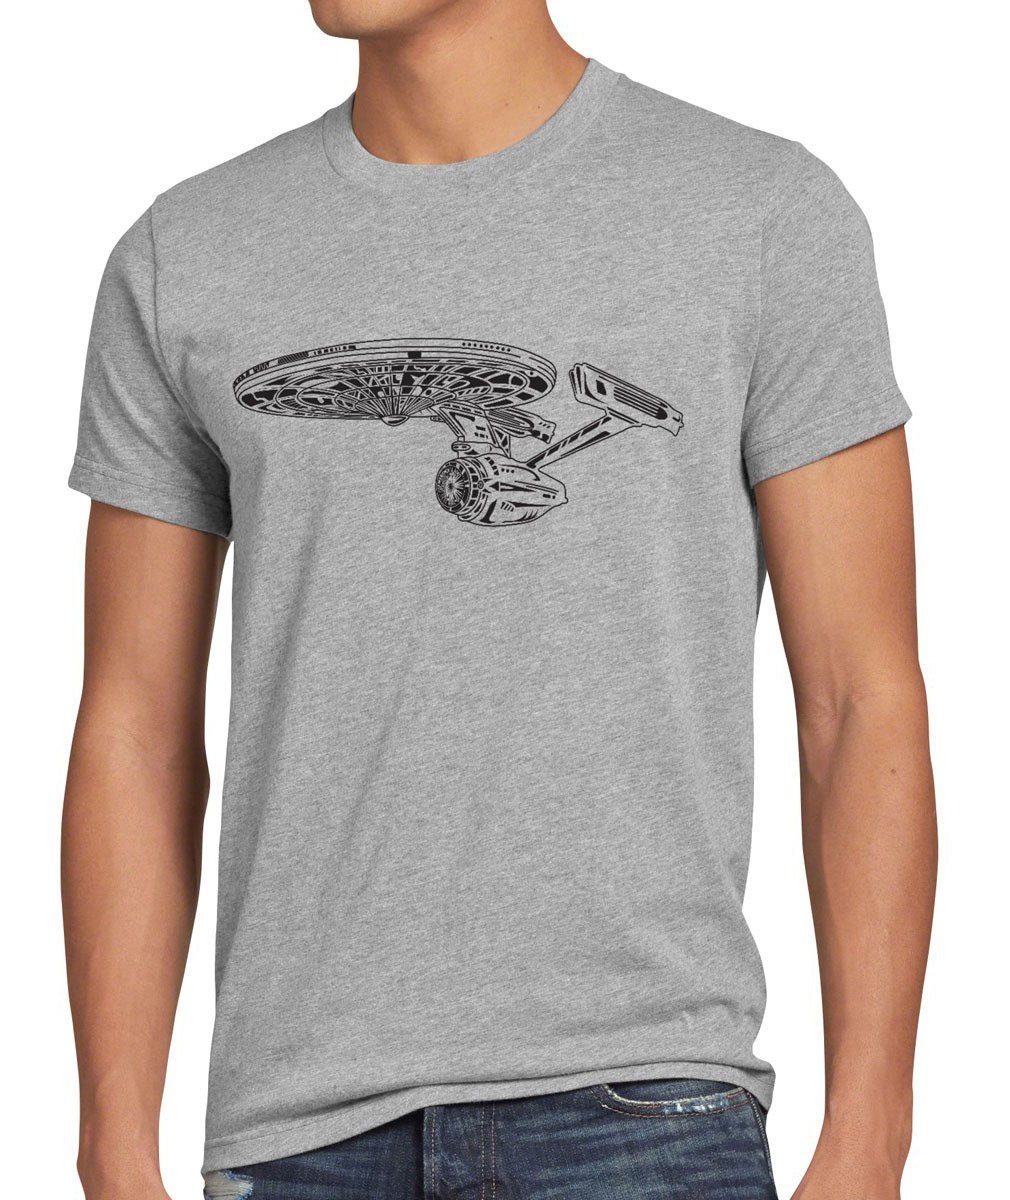 style3 Print-Shirt Herren T-Shirt Trekkie Sci-Fi spock raumschiff trek enterprise wars voyager star grau meliert